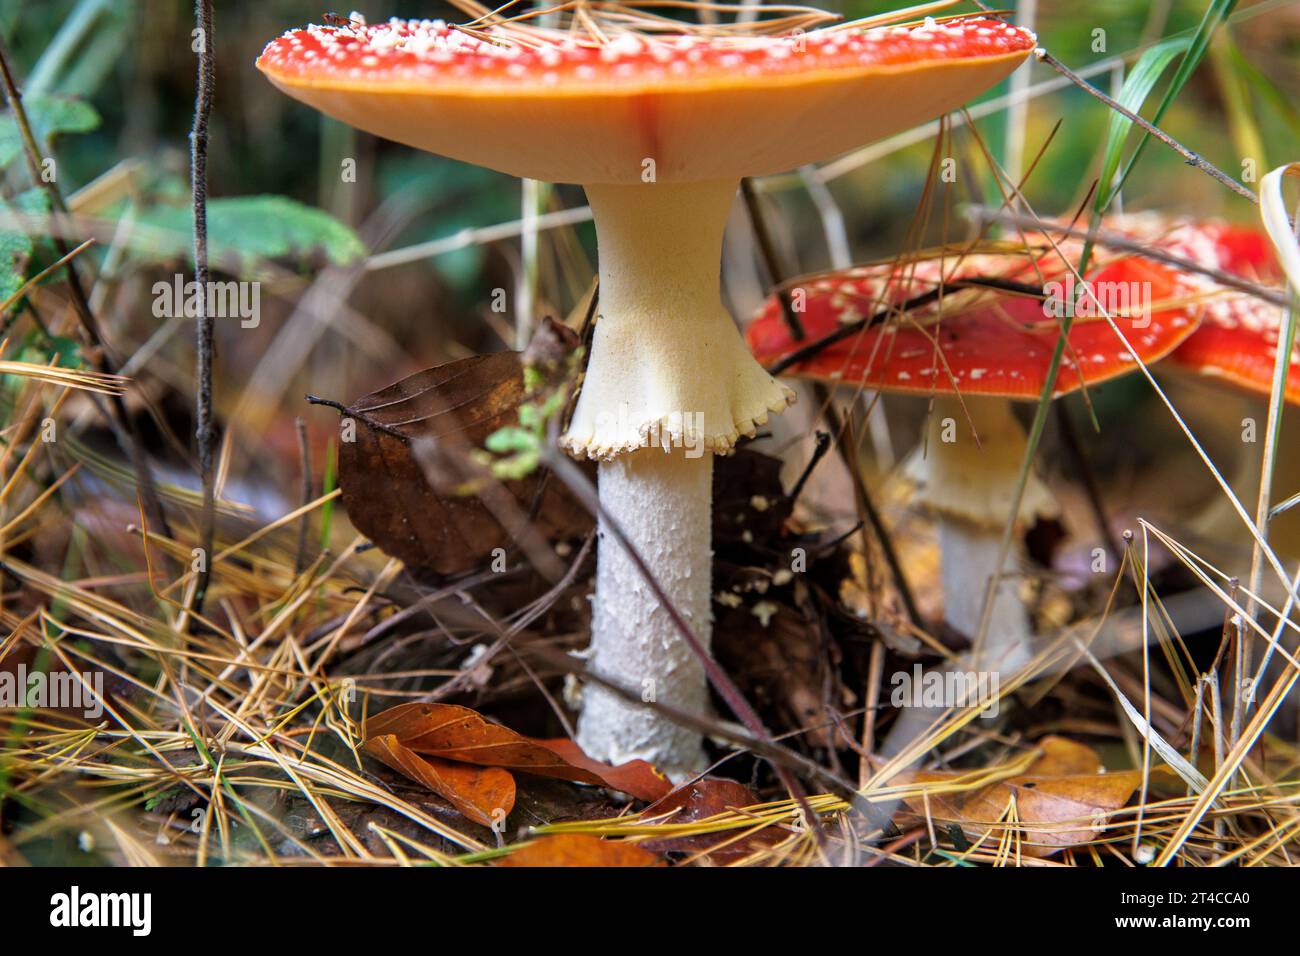 Mosca funghi agarici (lat. Amanita muscaria), Renania settentrionale-Vestfalia, Germania. Fliegenpilze (lat. Amanita muscaria), Nordrhein-Westfalen, Deutschland. Foto Stock